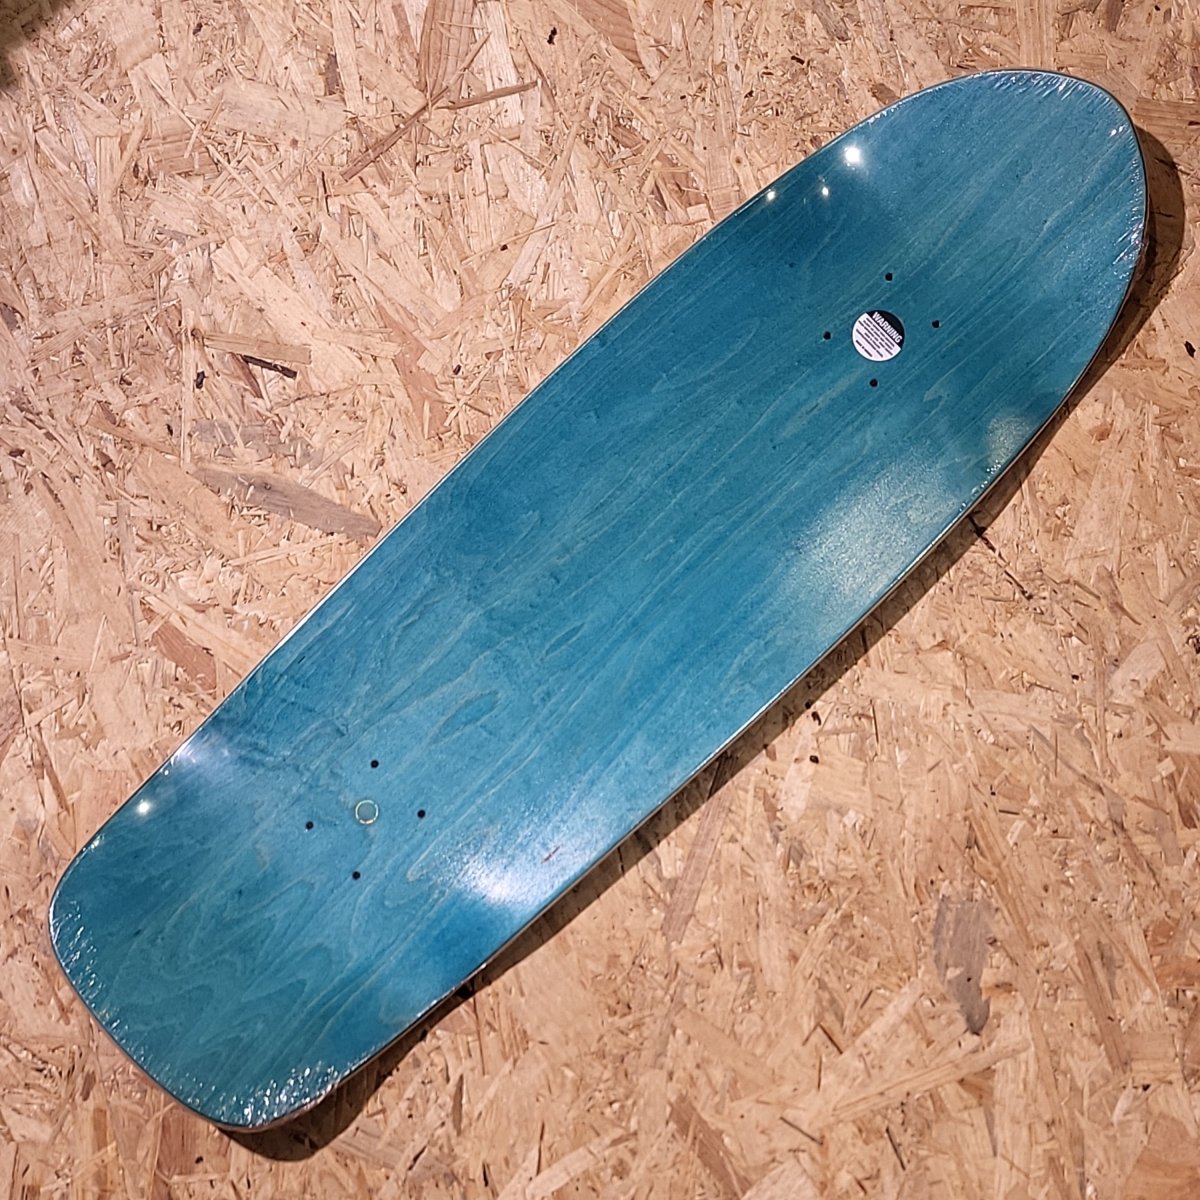 Dogtown Bigger Boy Shaped 9.5" Deck - Skateboard-Decks - Rollbrett Mission